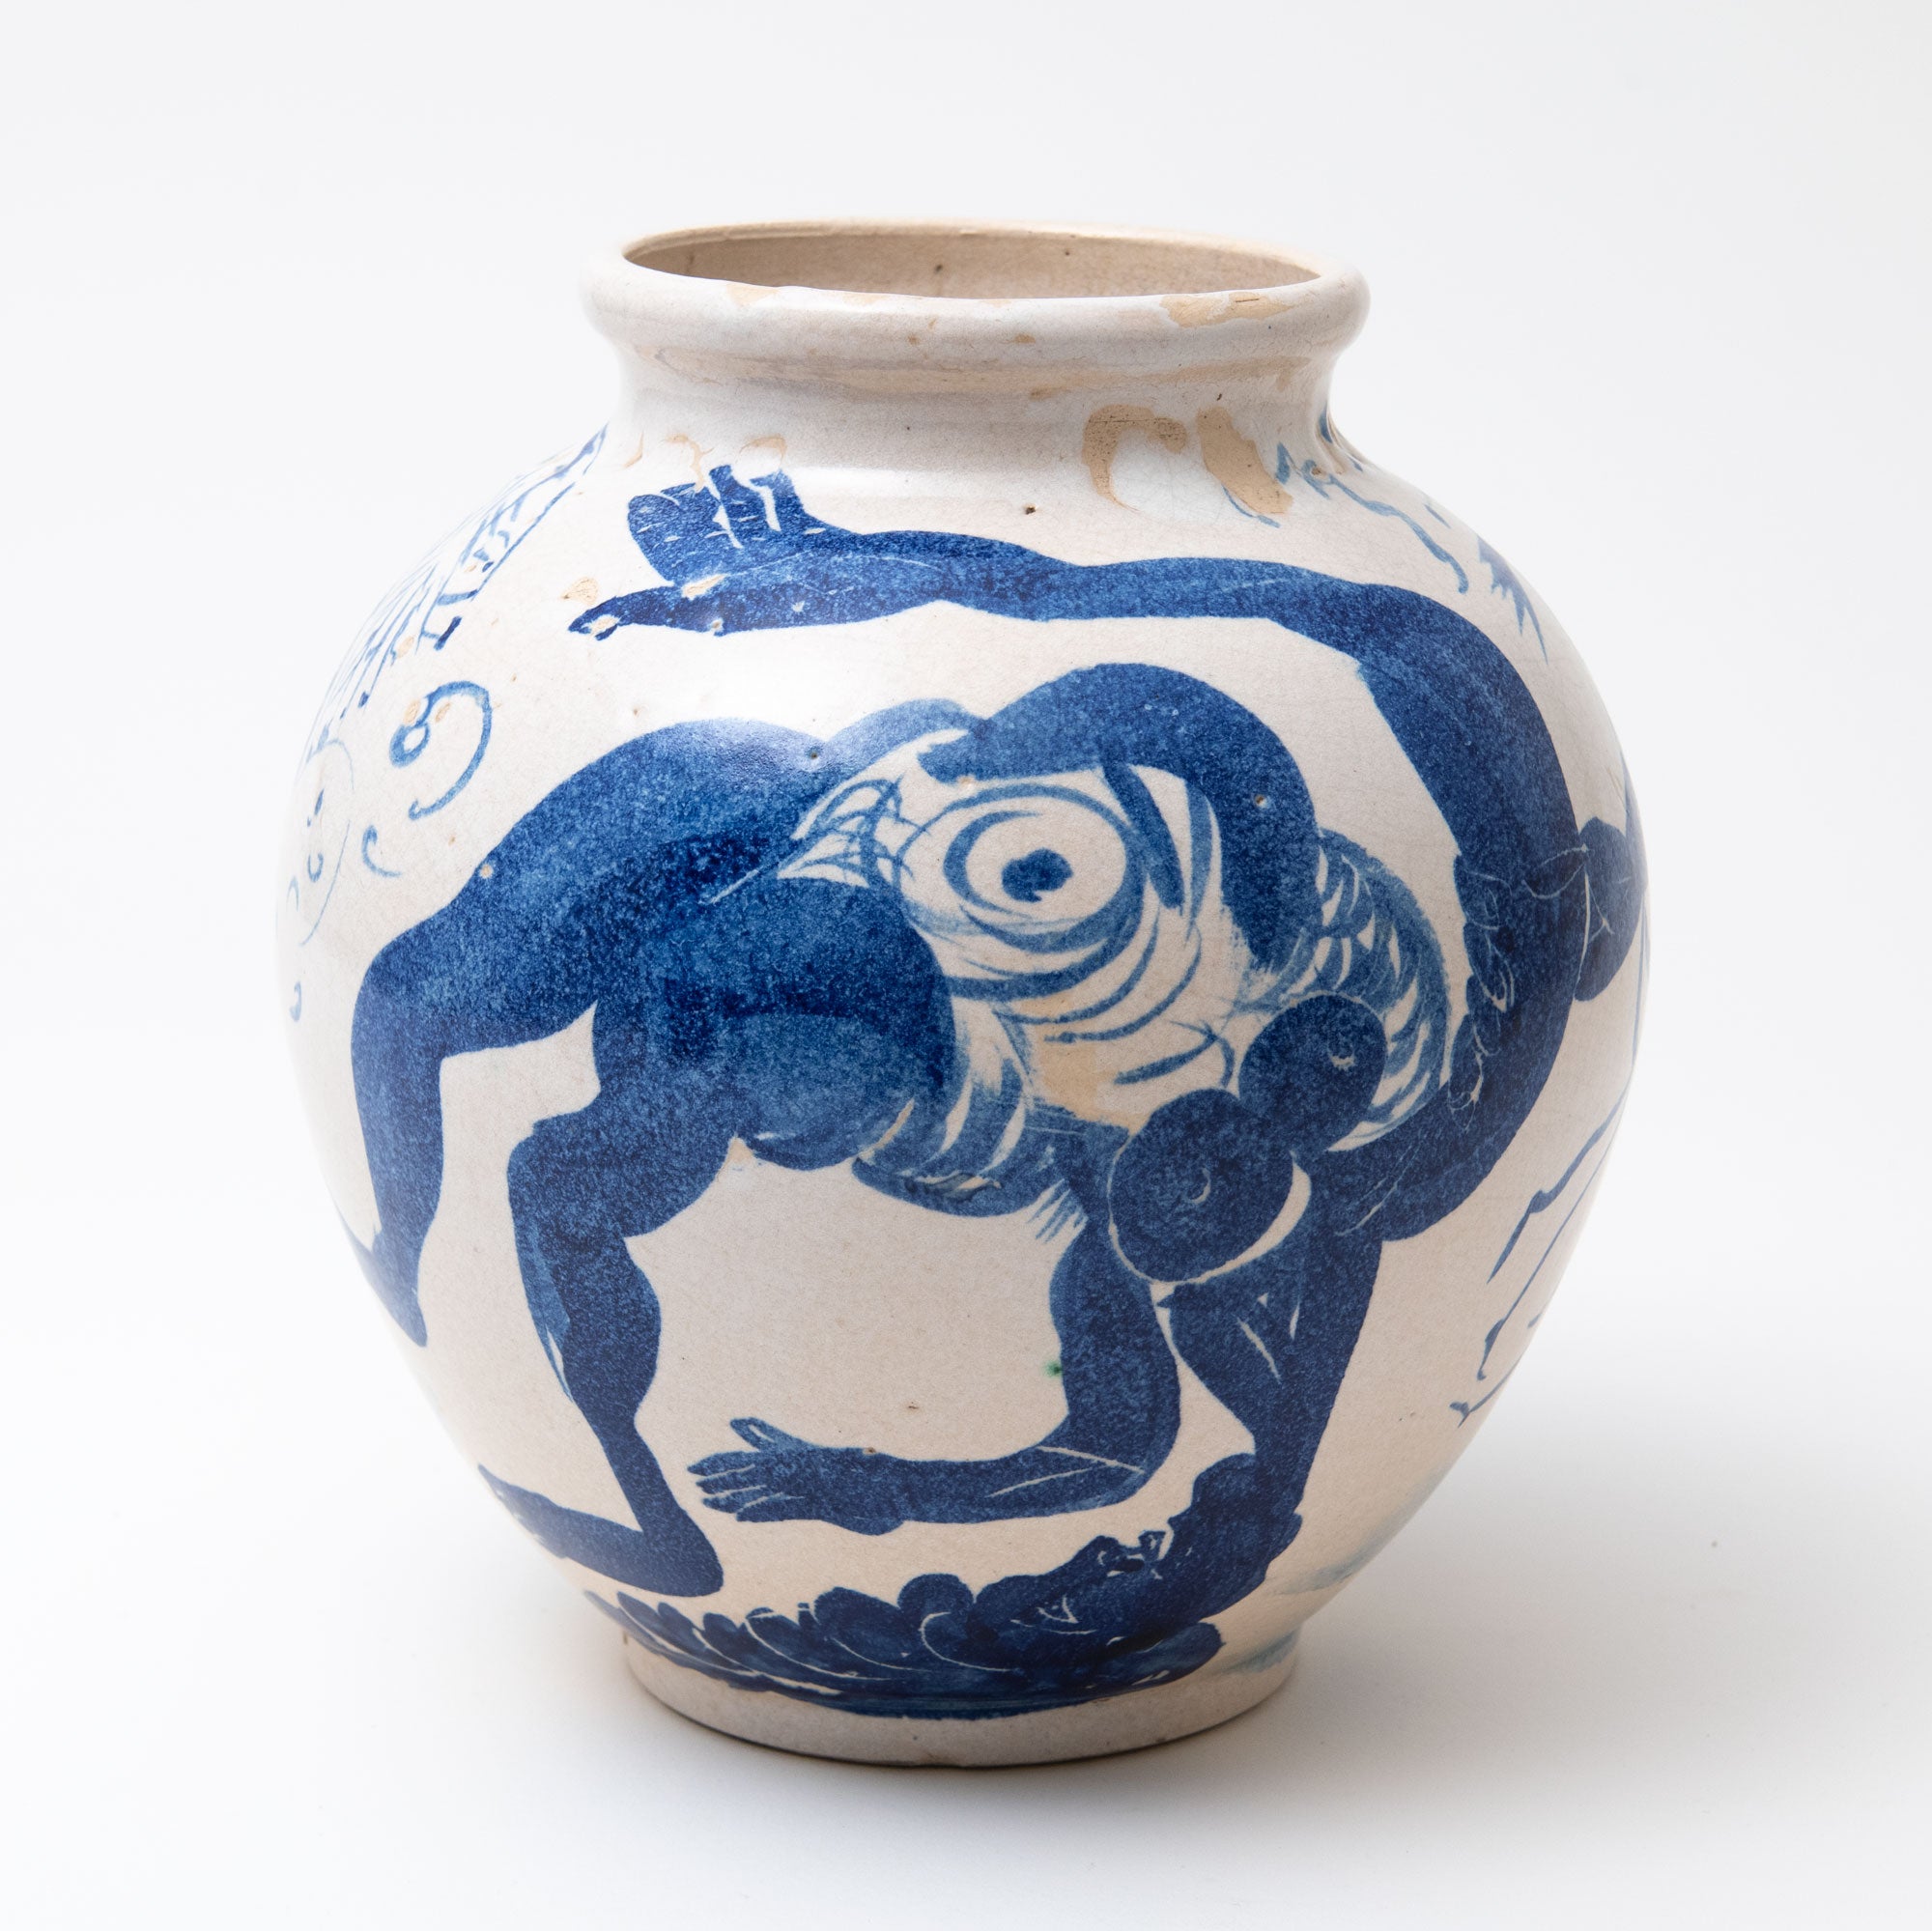 Ceri Richards, Greek Vase (detail), hand-painted ceramic